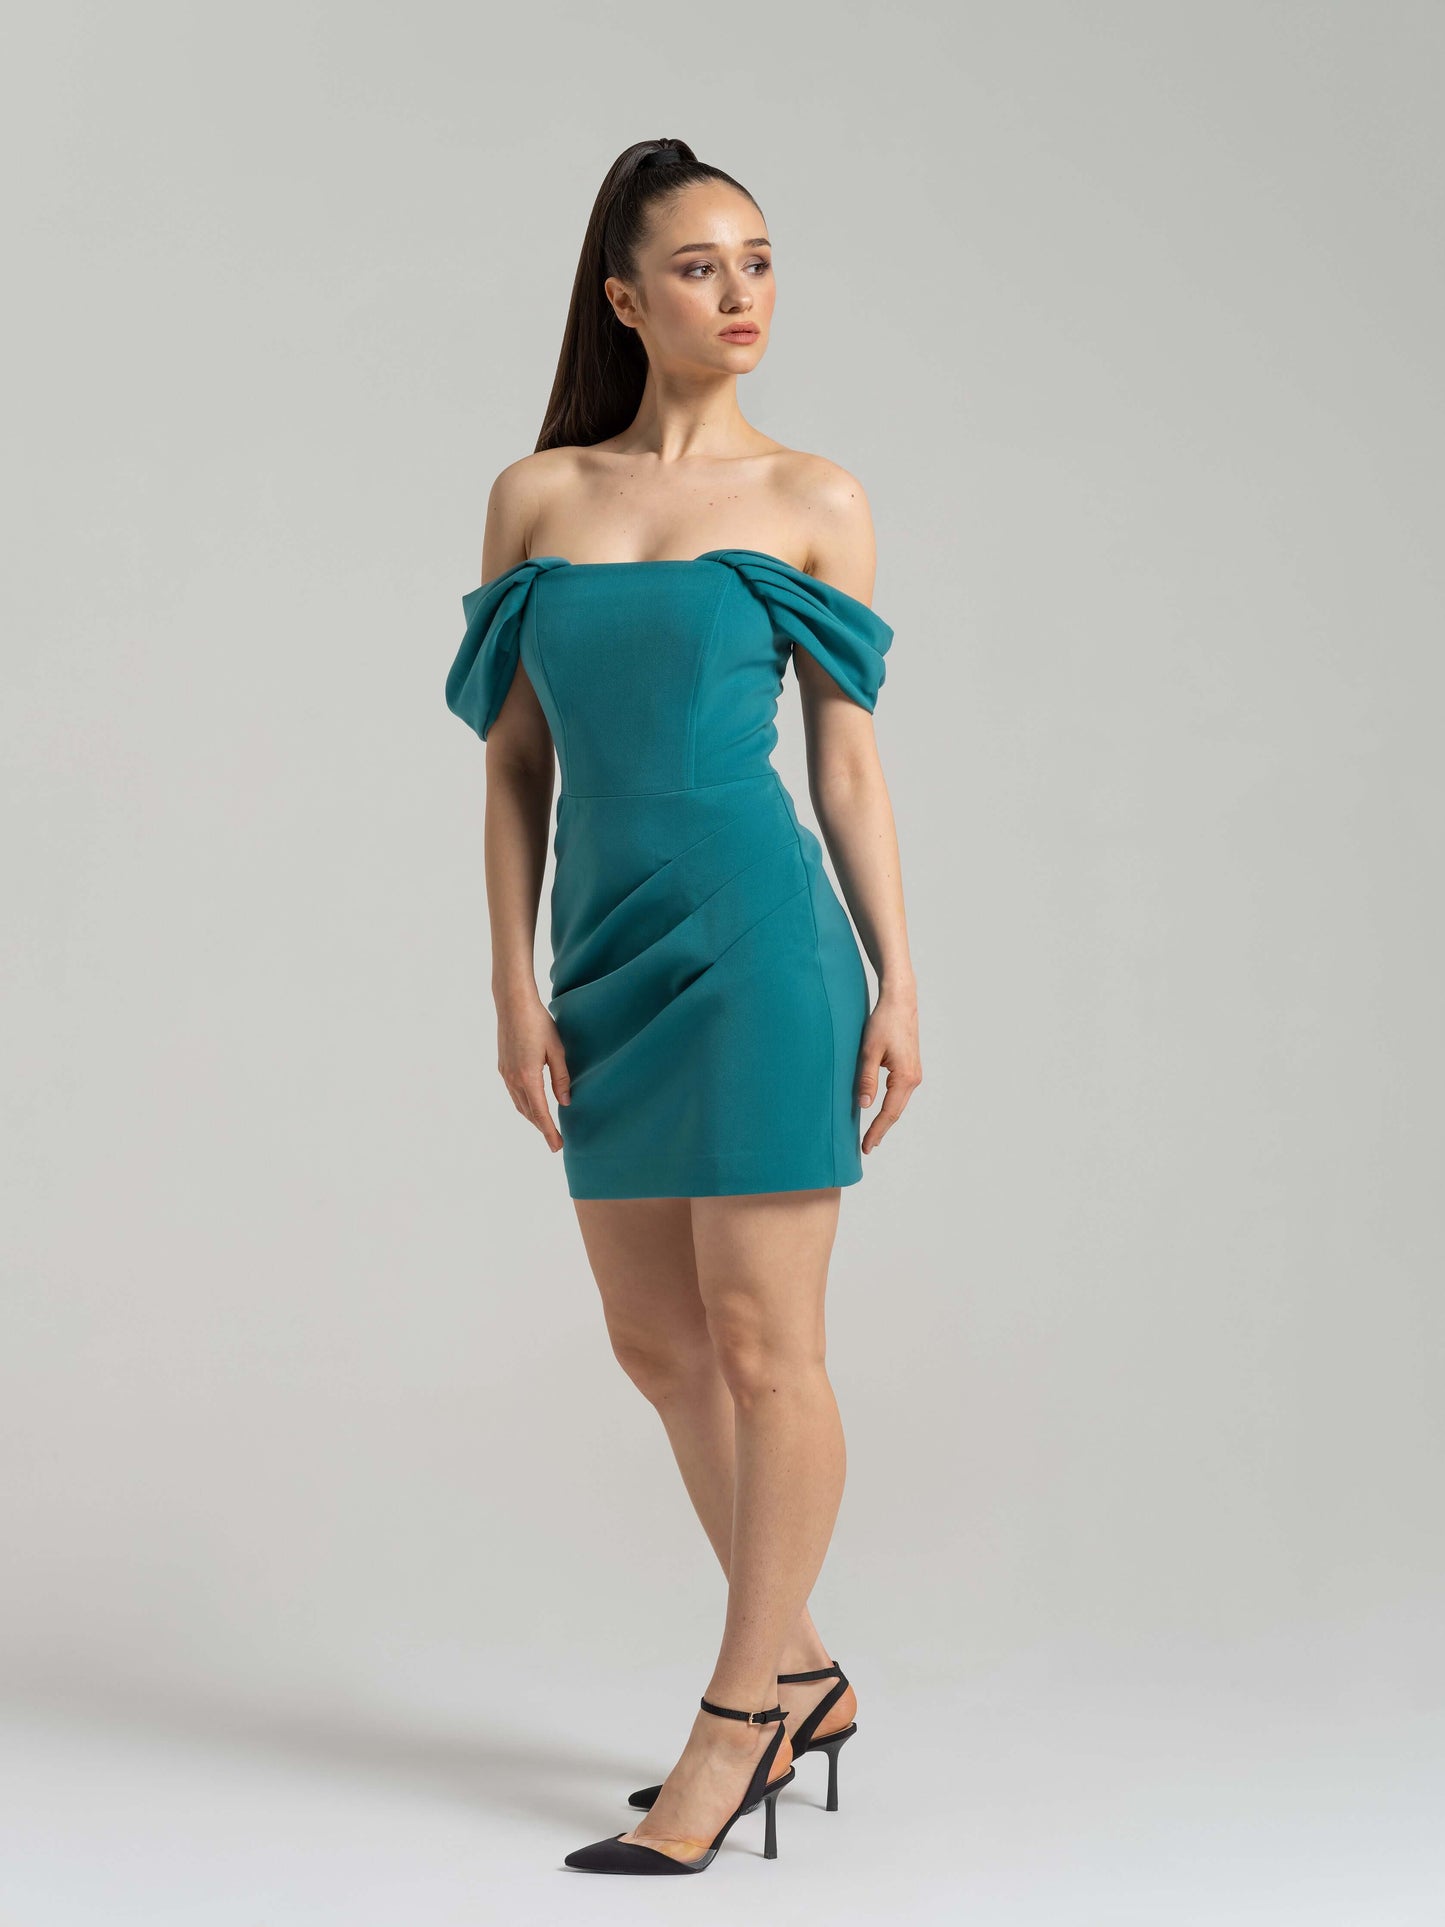 Evoking Glamour Mini Dress - Turquoise